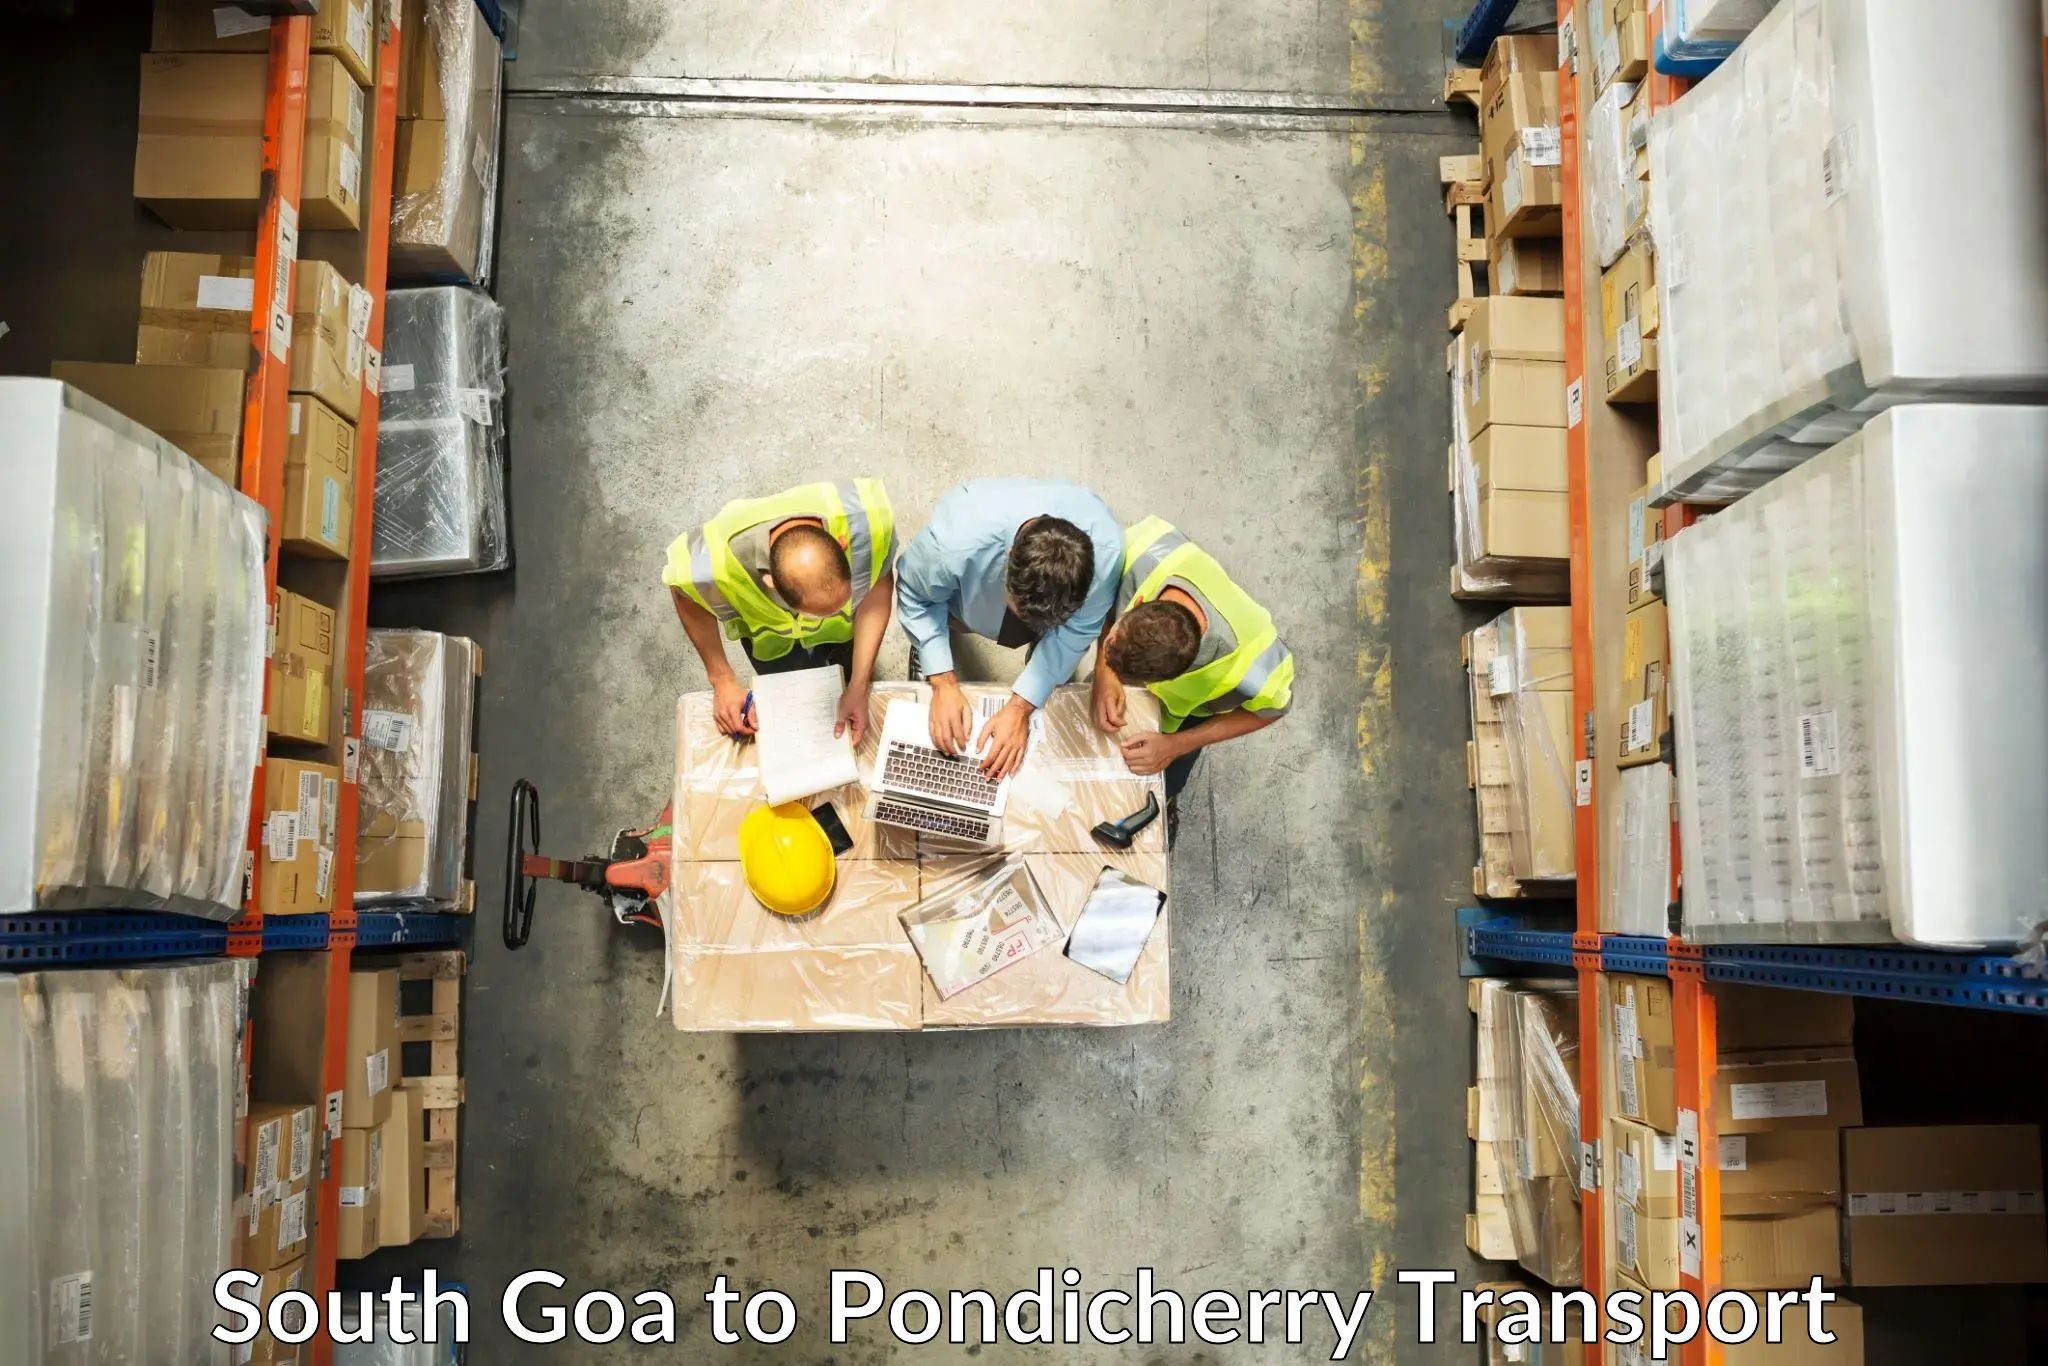 Online transport service South Goa to Pondicherry